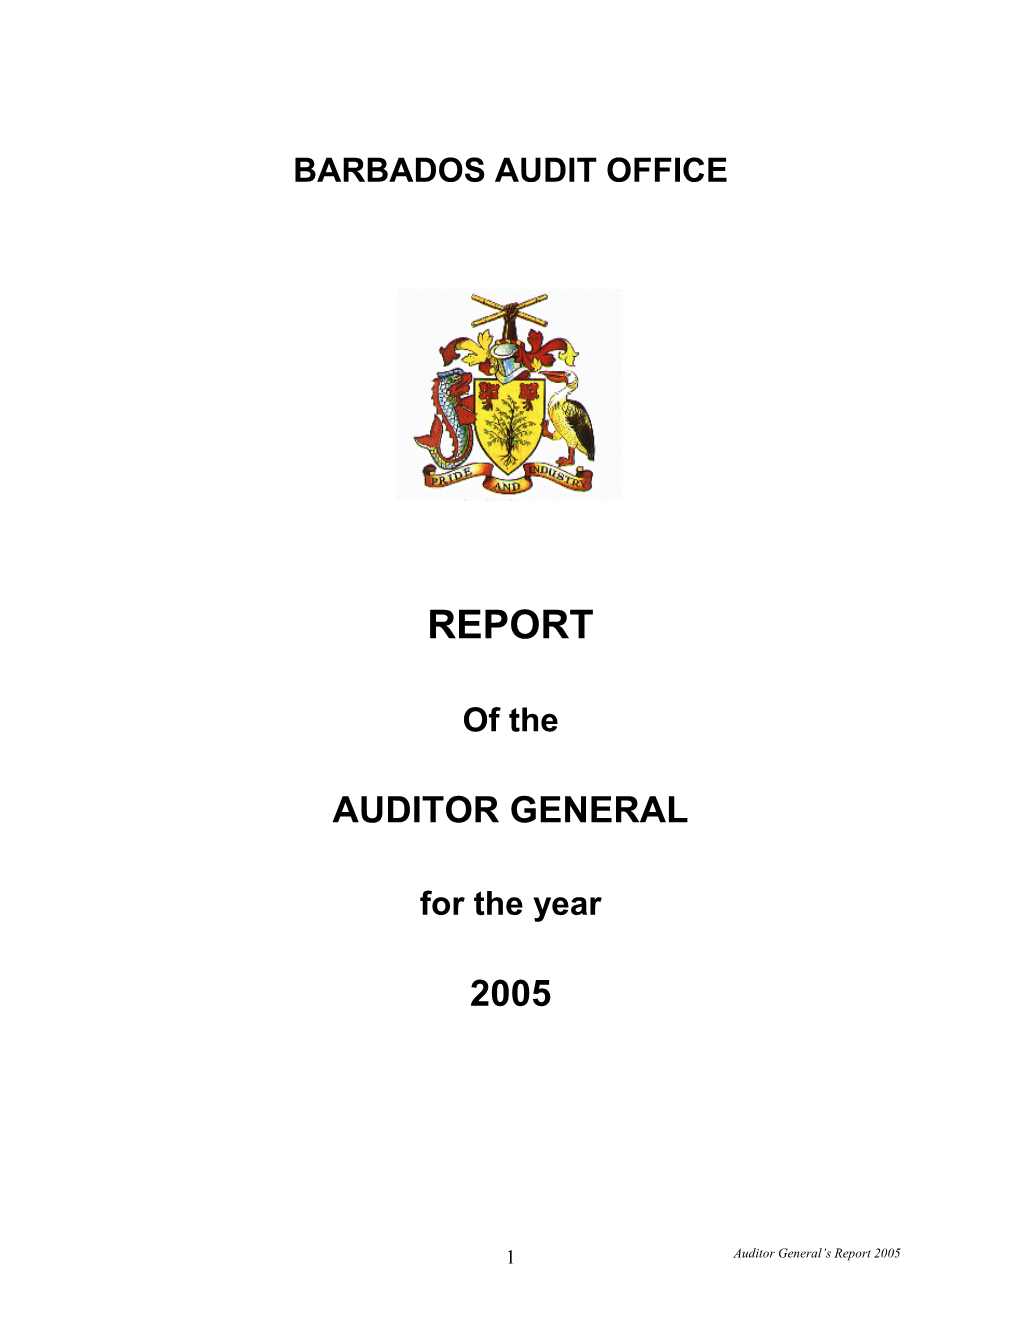 Auditor General Report